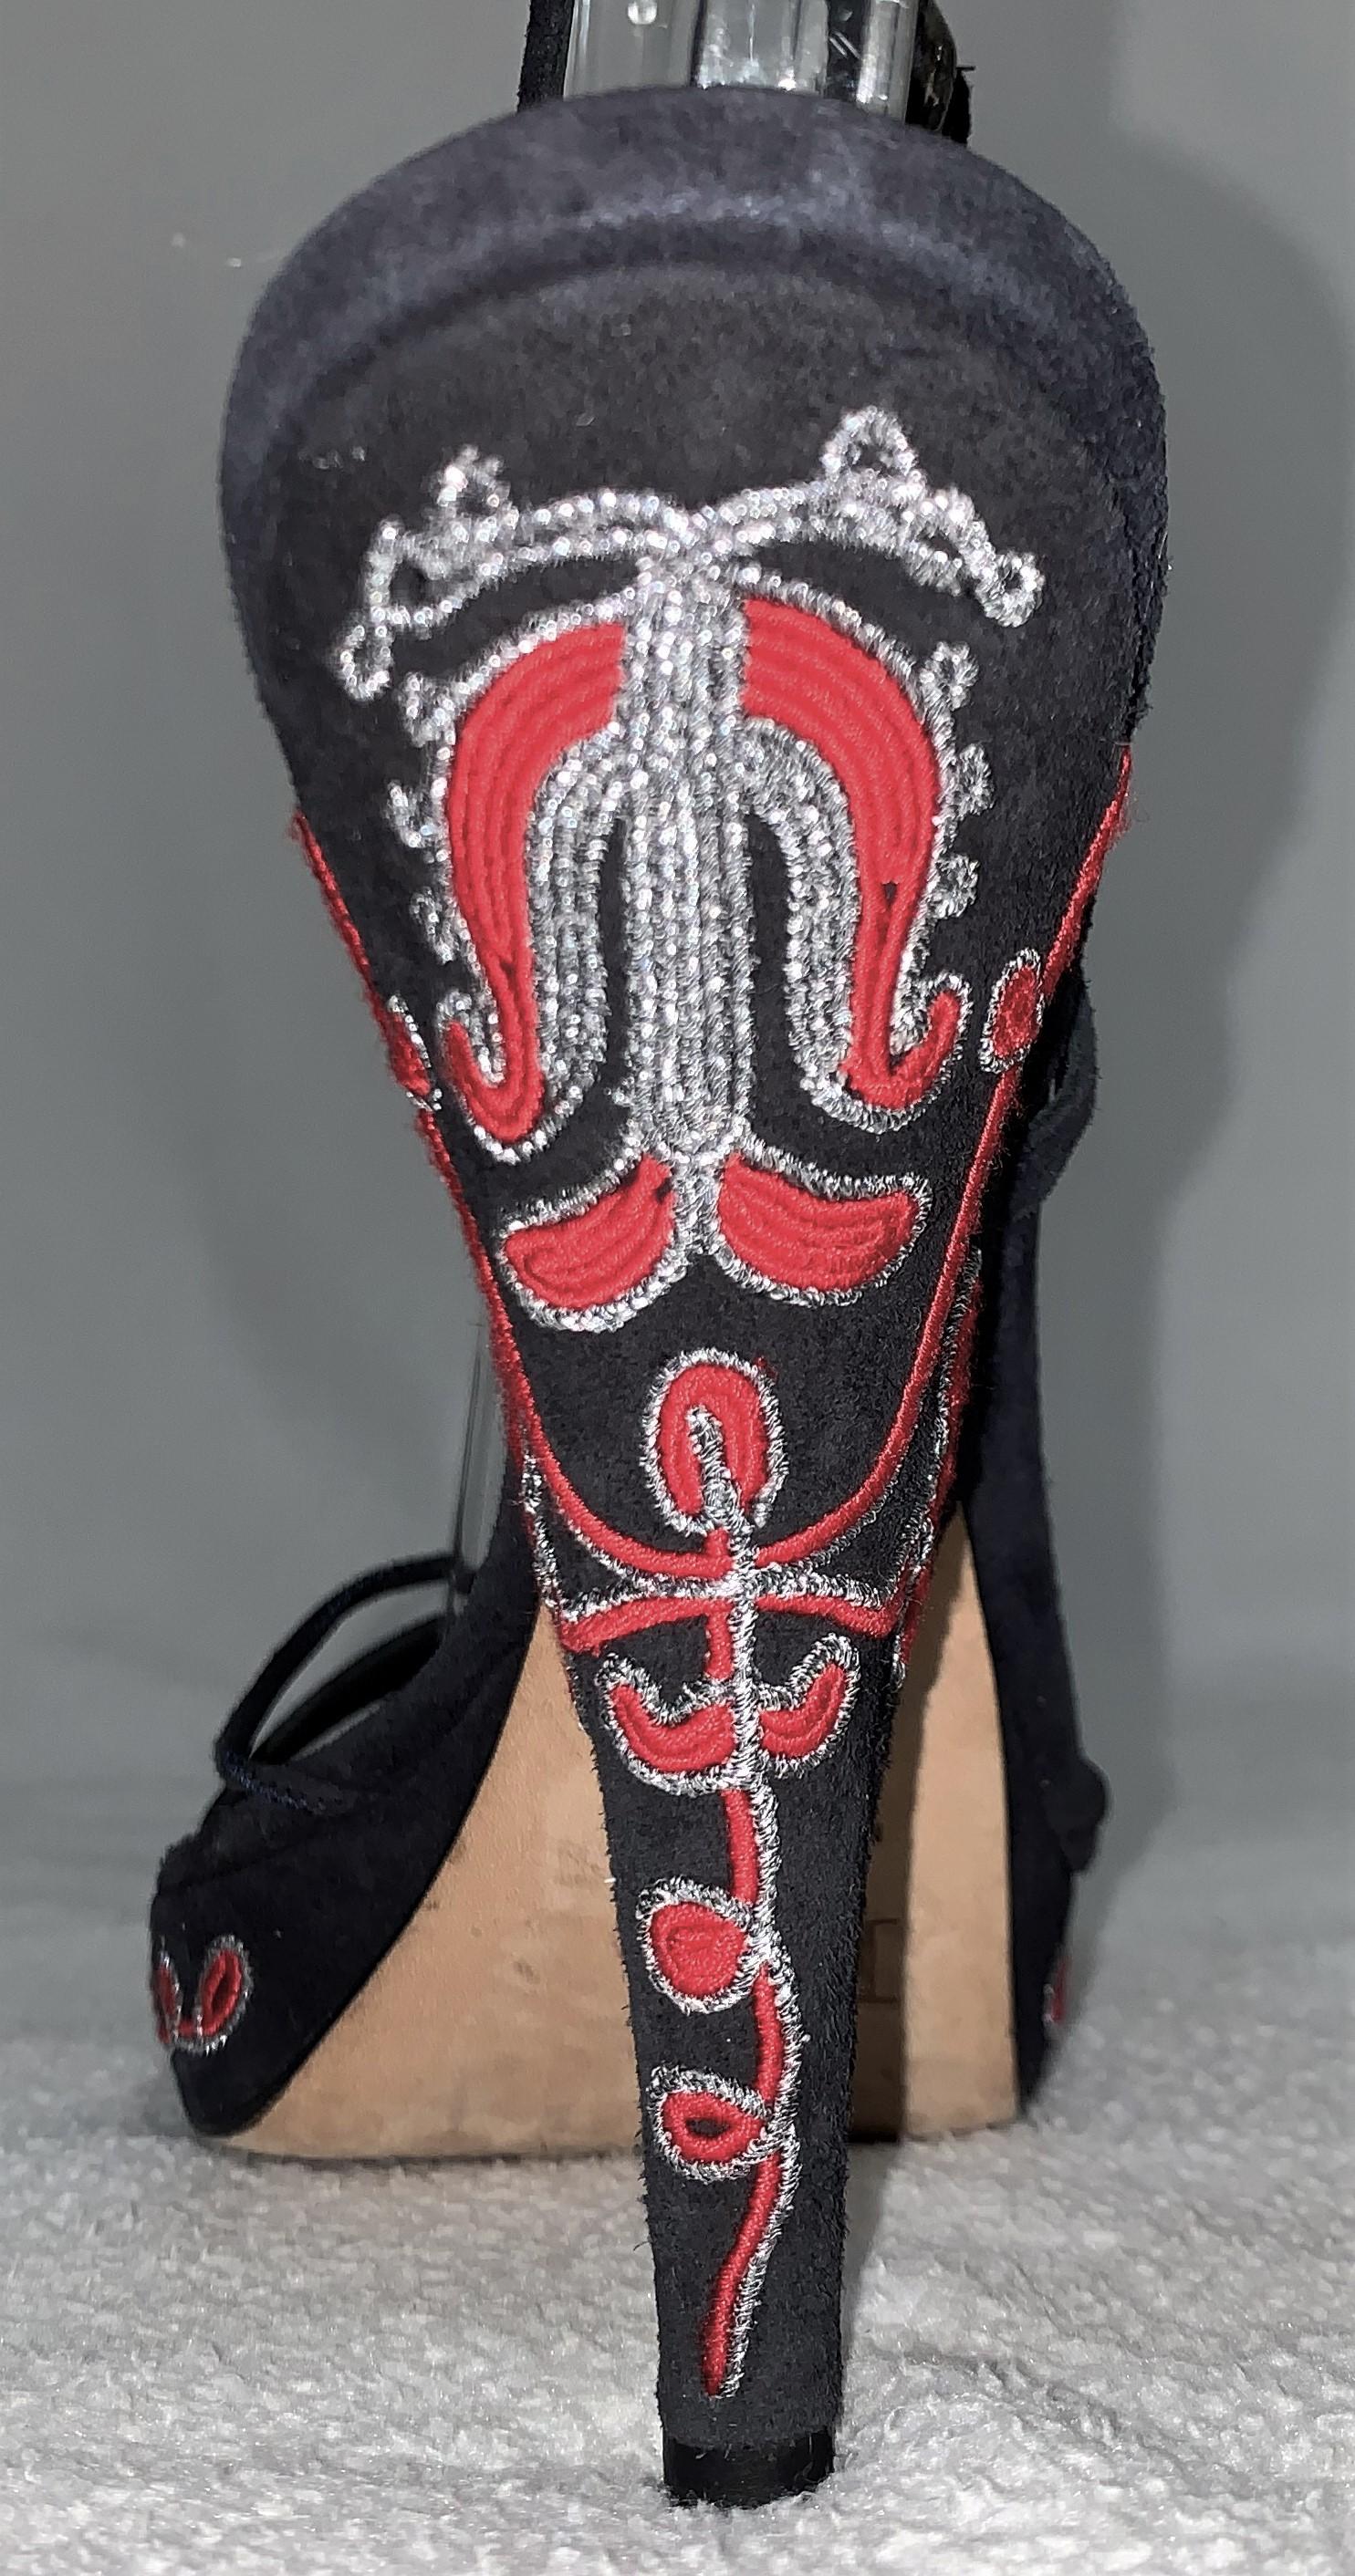 S/S 1999 Christian Dior John Galliano Black & Red Embellished Heels 38 2